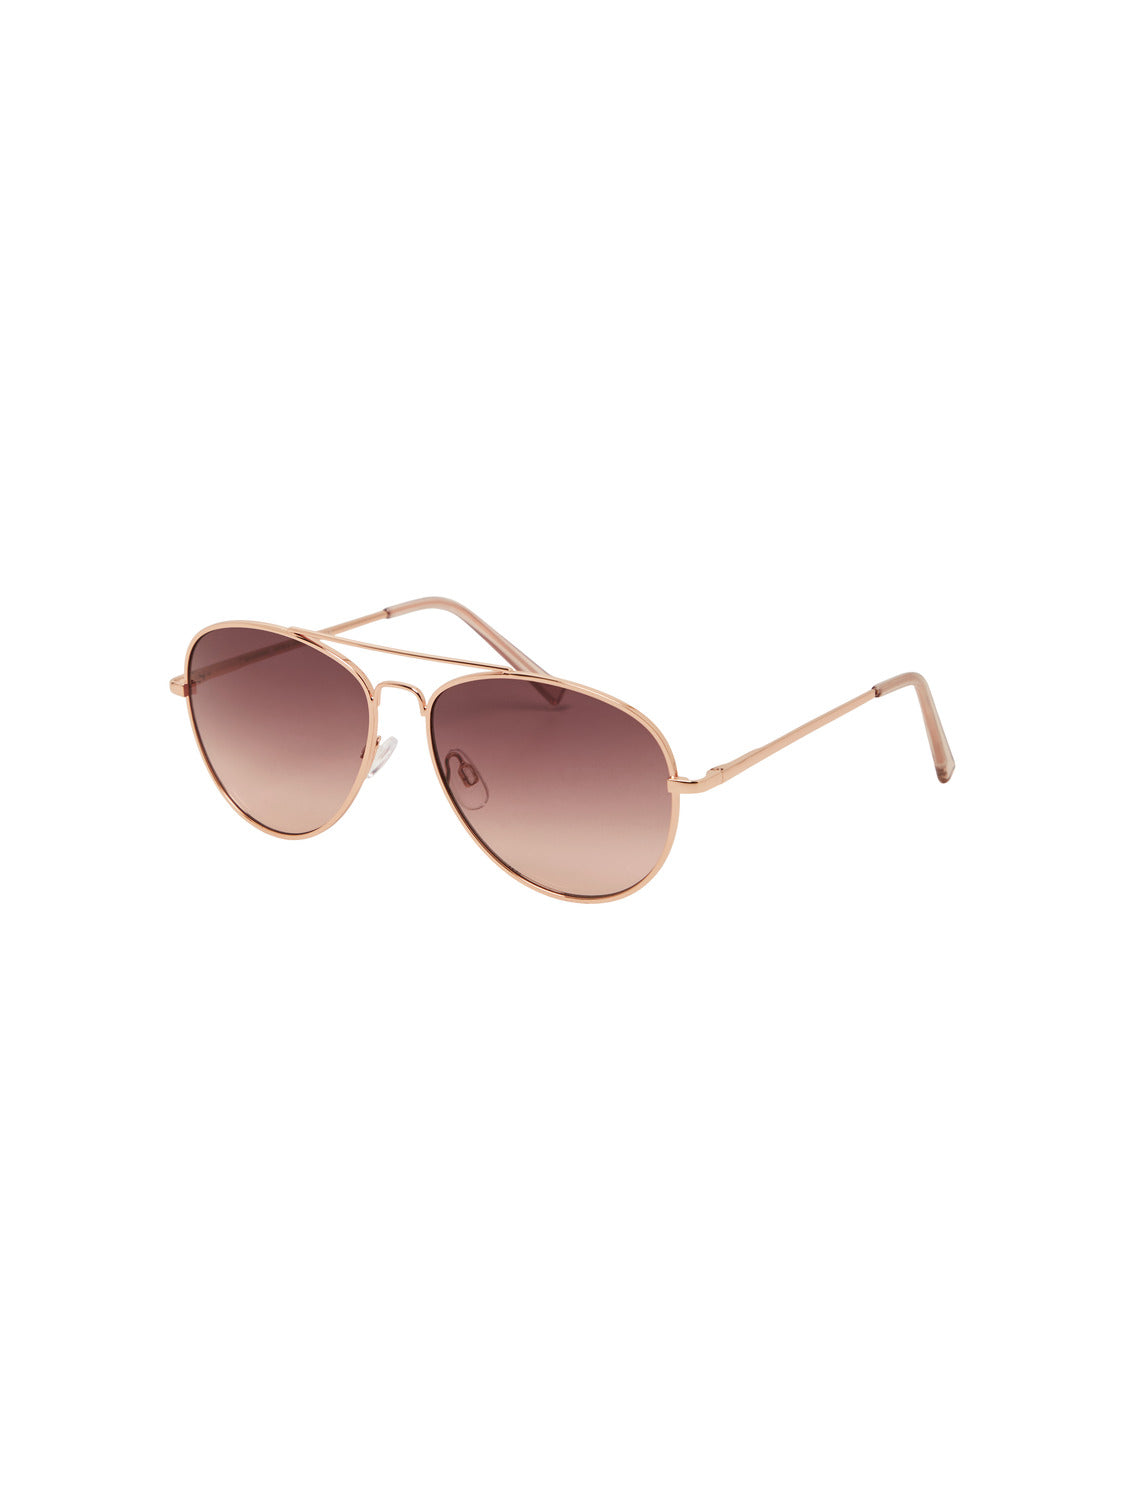 VMSHINE Sunglasses - Rose Gold Colour